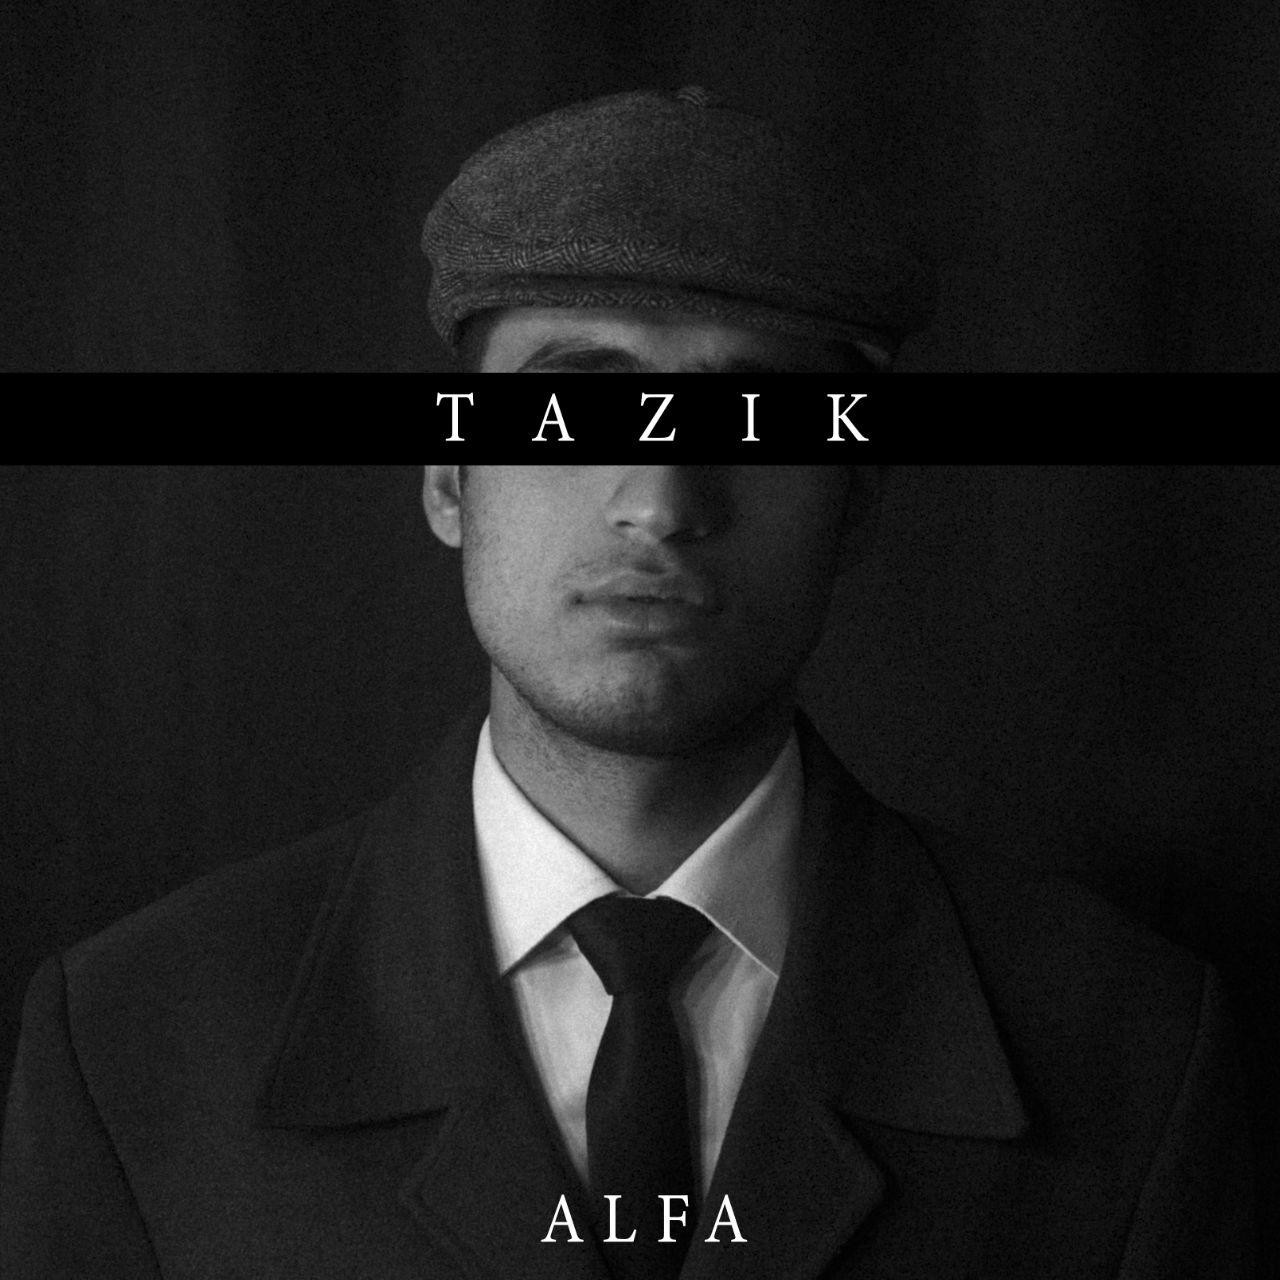 Tazik - Alfa Album